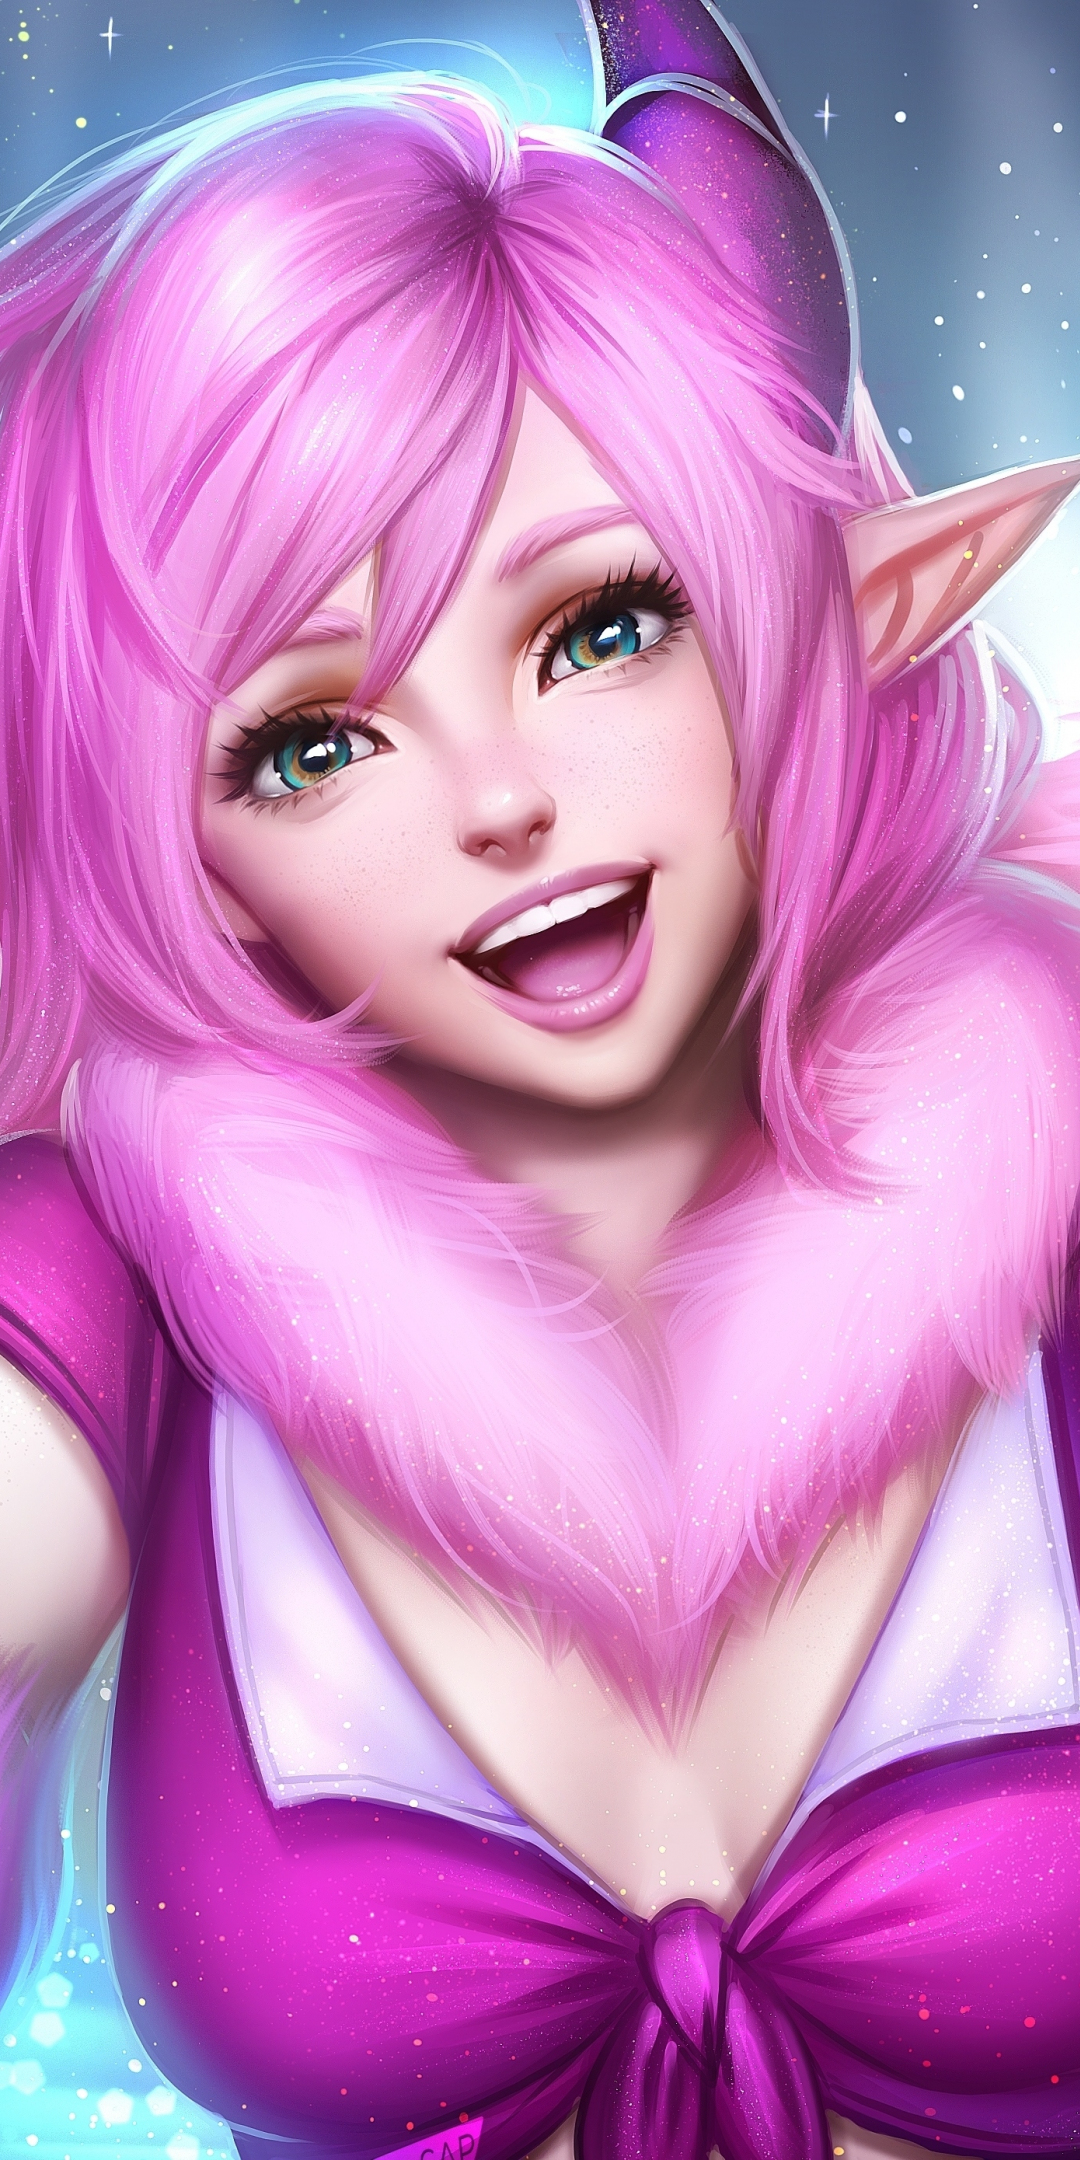 Pink hair, elf girl, smile, pretty, original, art, 1080x2160 wallpaper